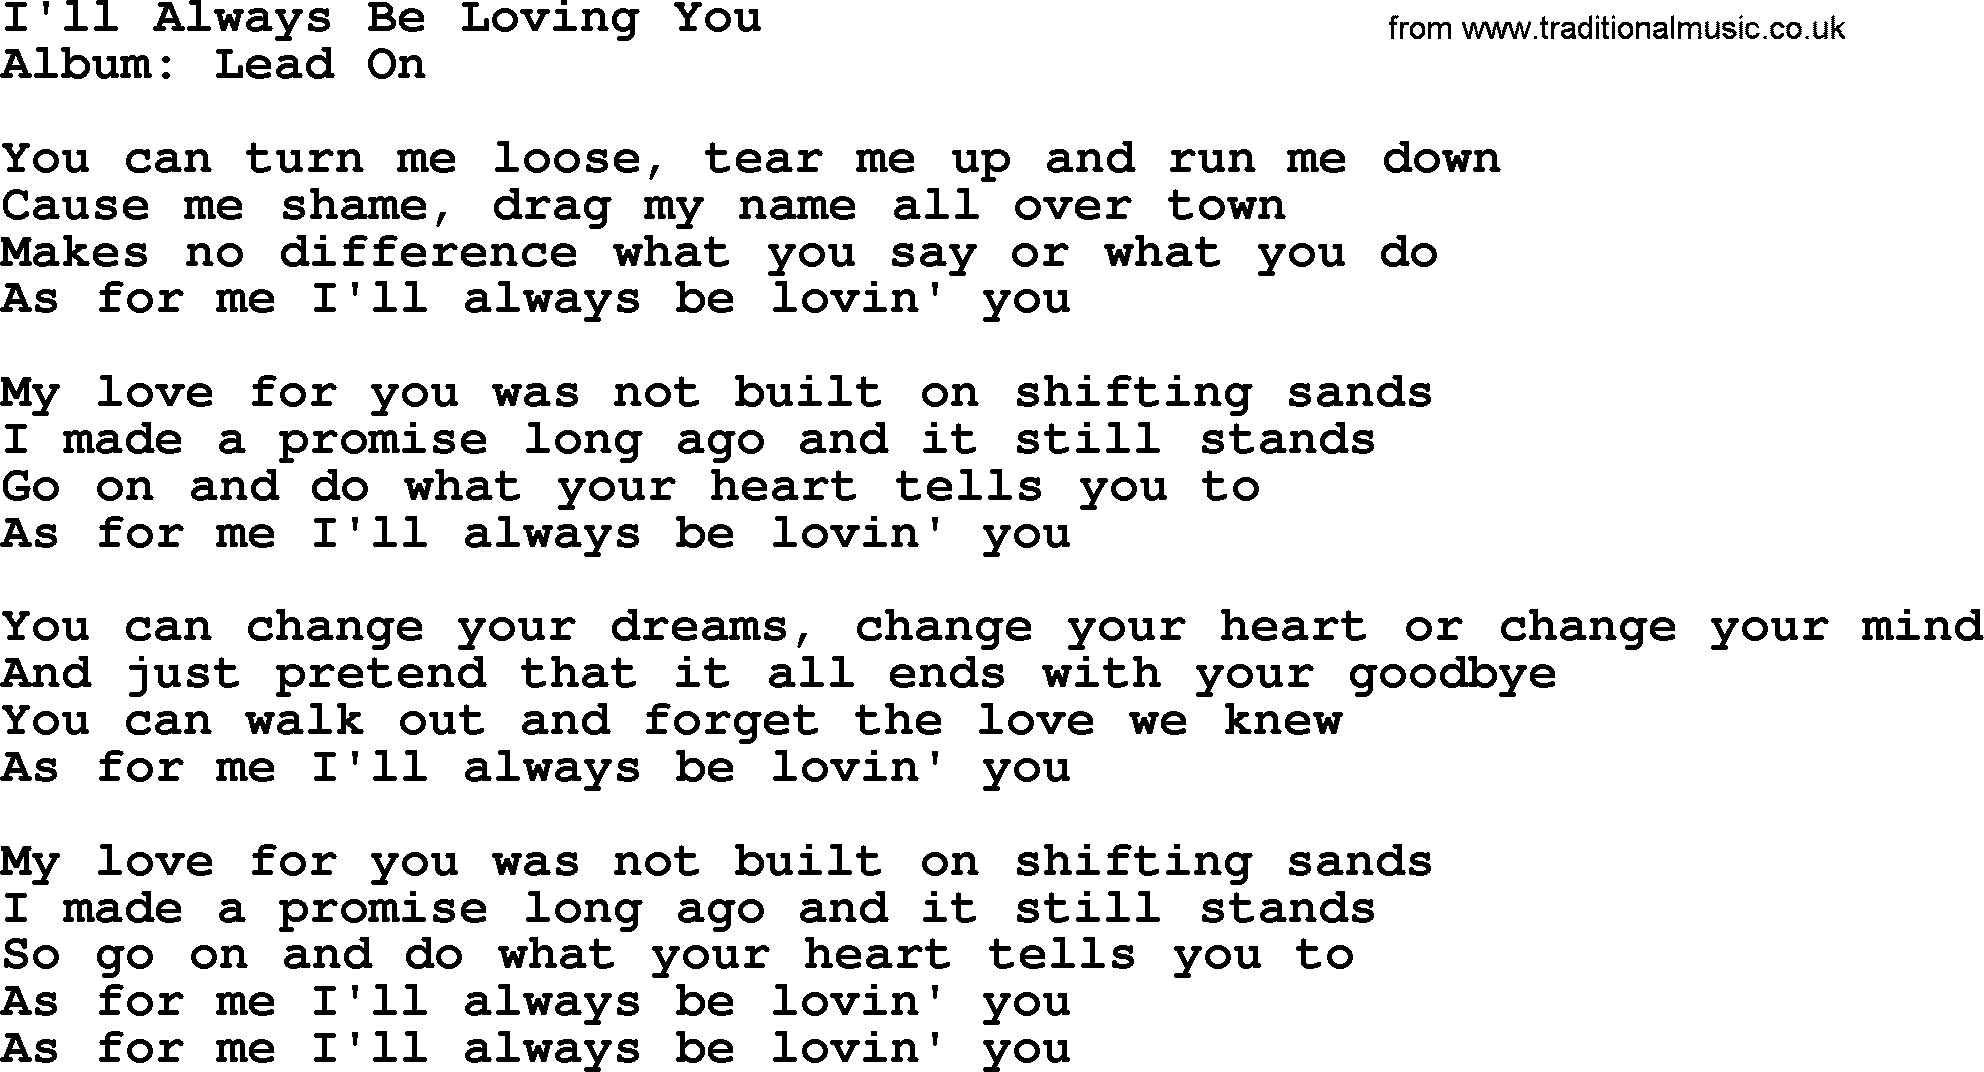 George Strait song: I'll Always Be Loving You, lyrics